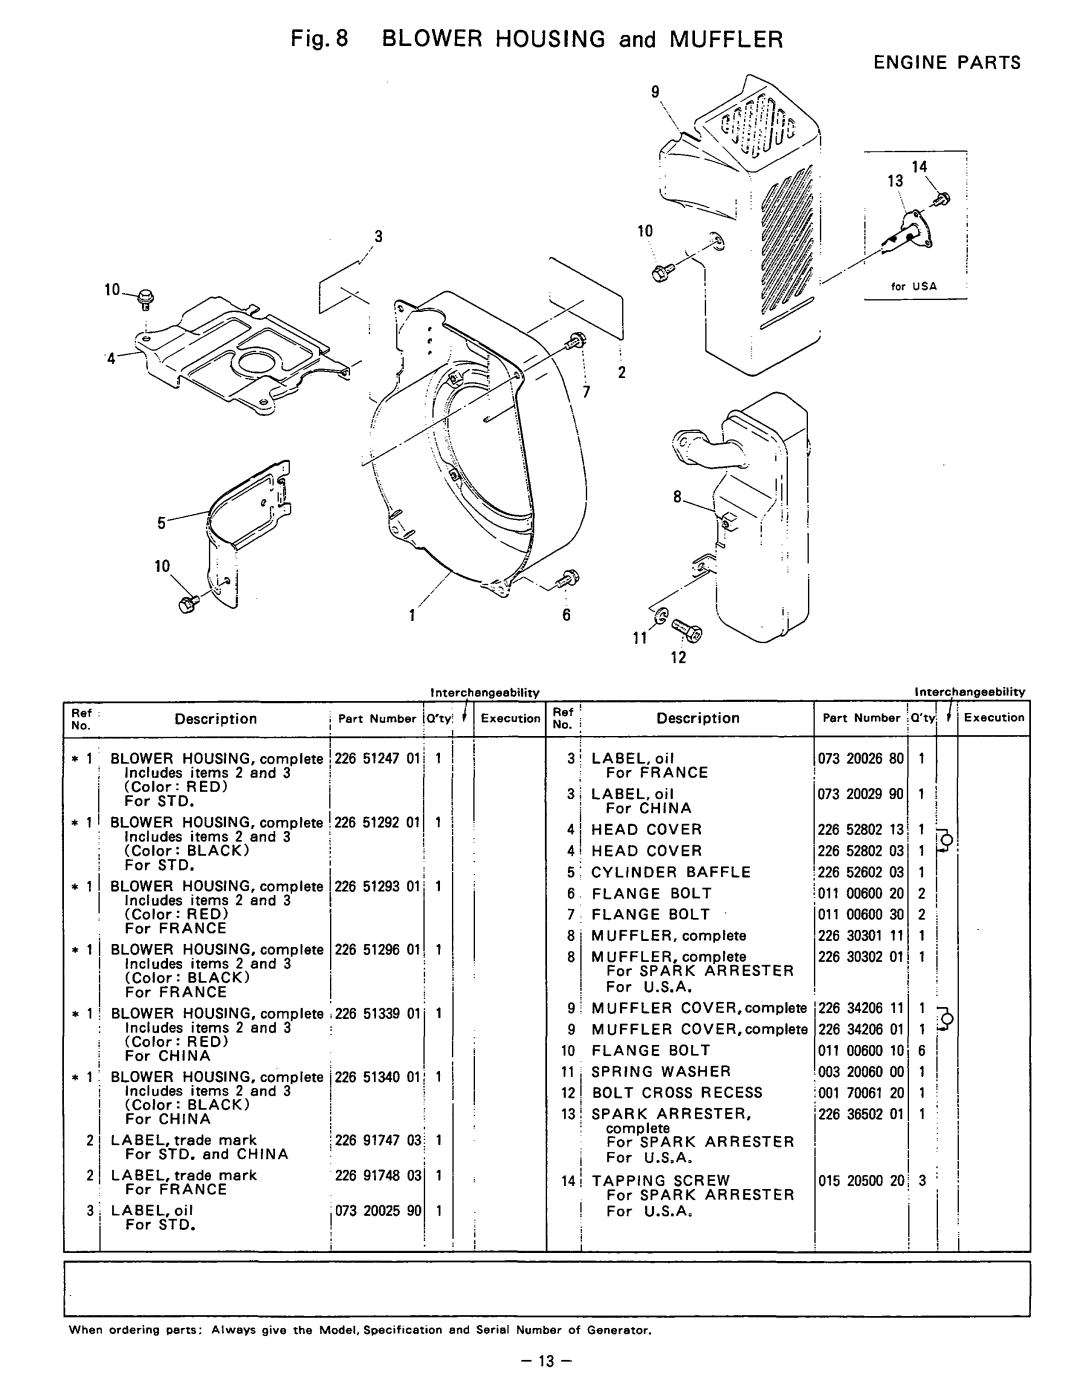 Subaru Robin Power Products R1200 manual BLOWER HOUSING and MUFFLER, Engine Parts, 2002990, 3420611 